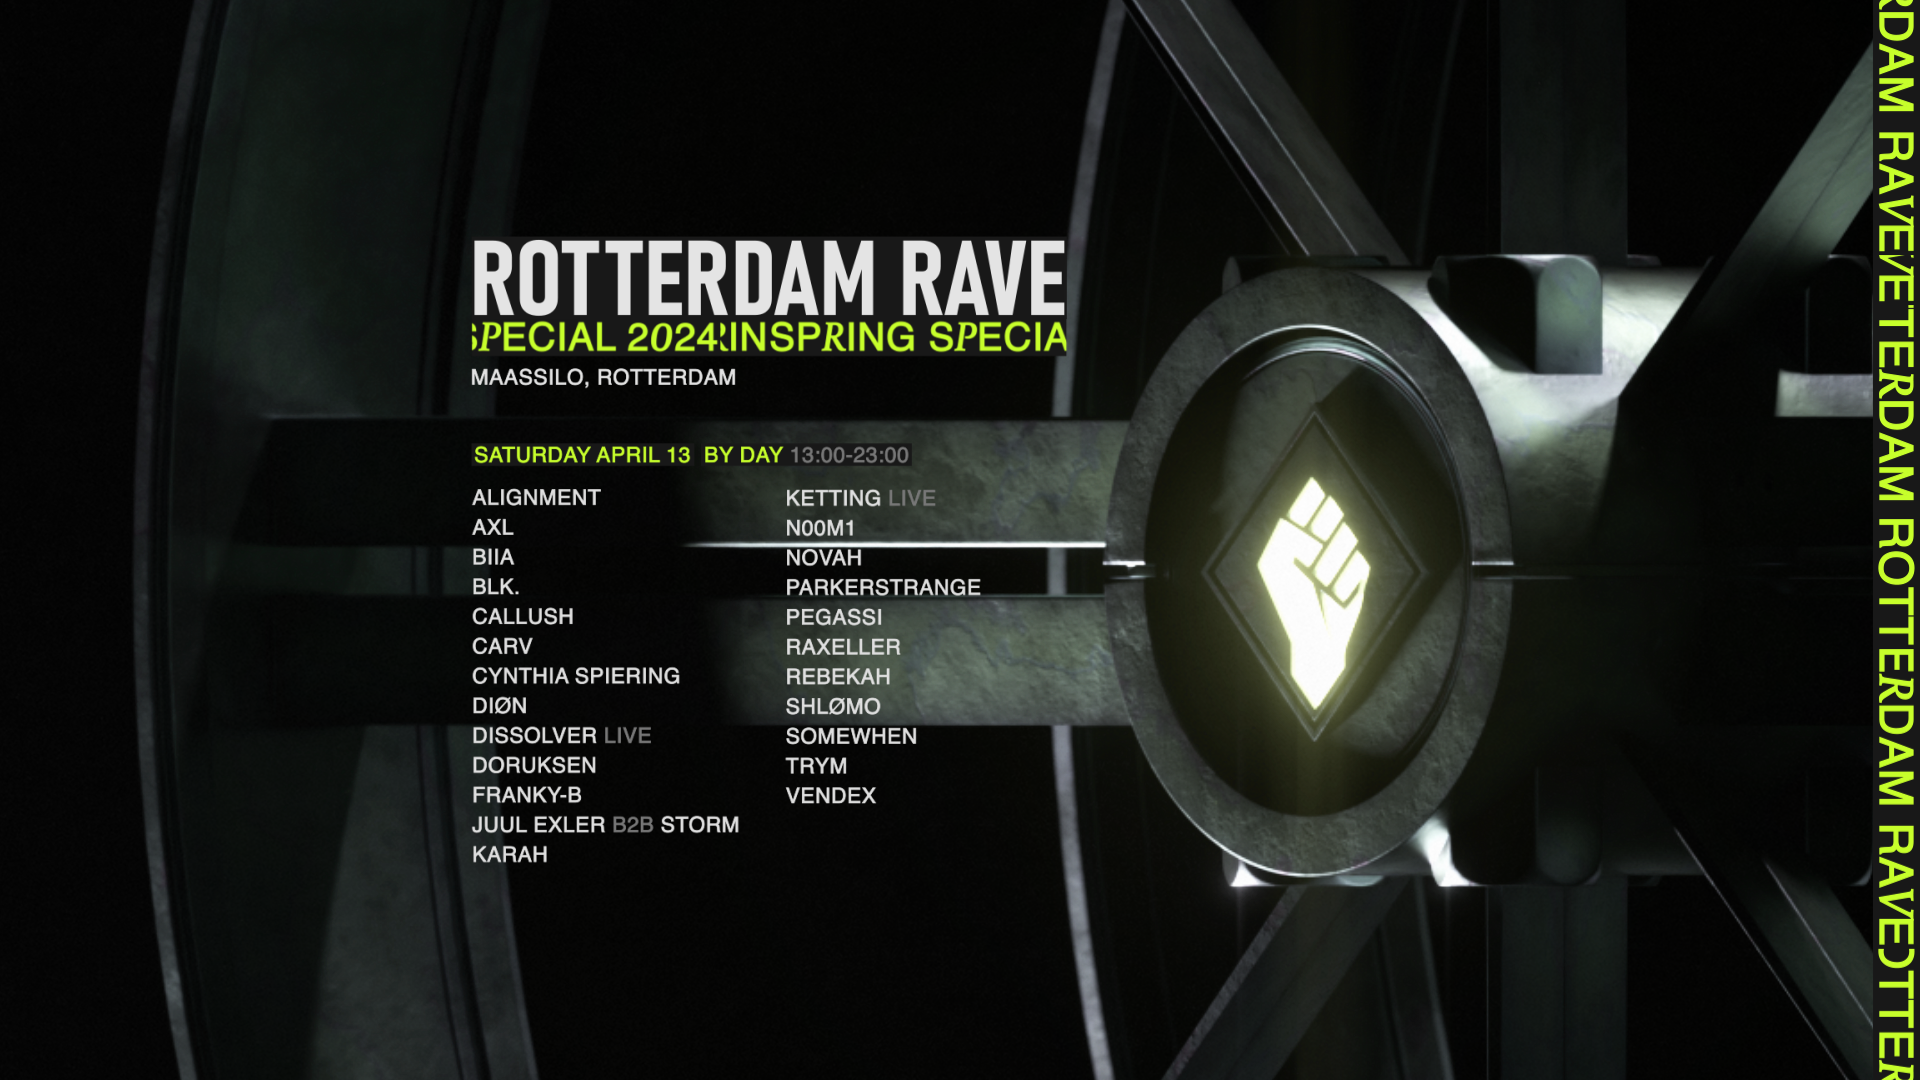 Rotterdam Rave 'Spring Special' 2024 at Maassilo, Rotterdam